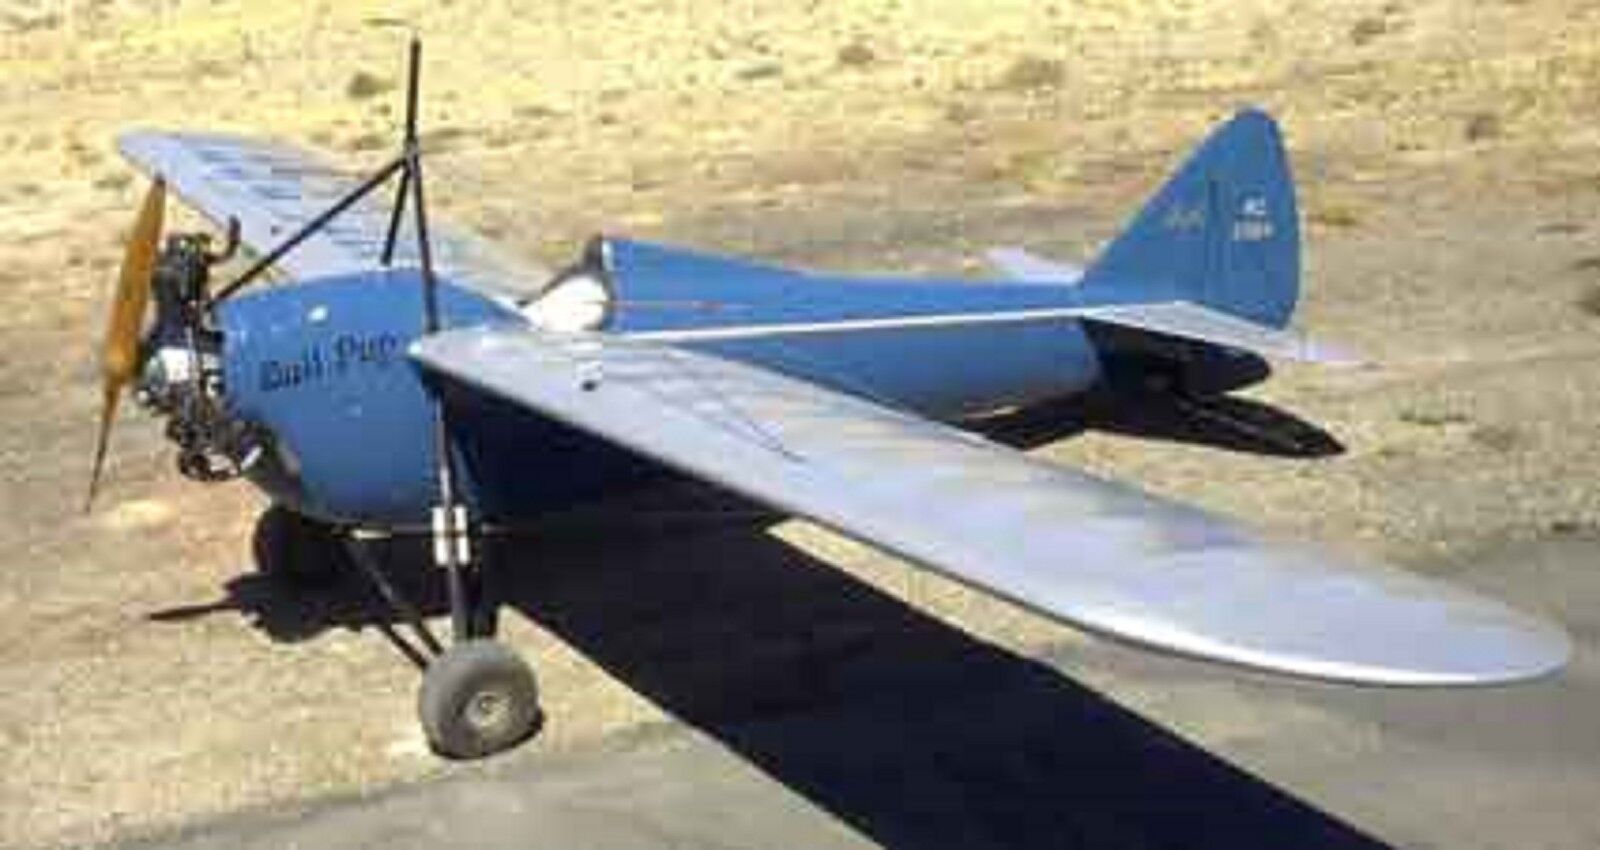 LA-1 Bull Pup Buhl USA Sports Airplane Wood Model Replica Big New